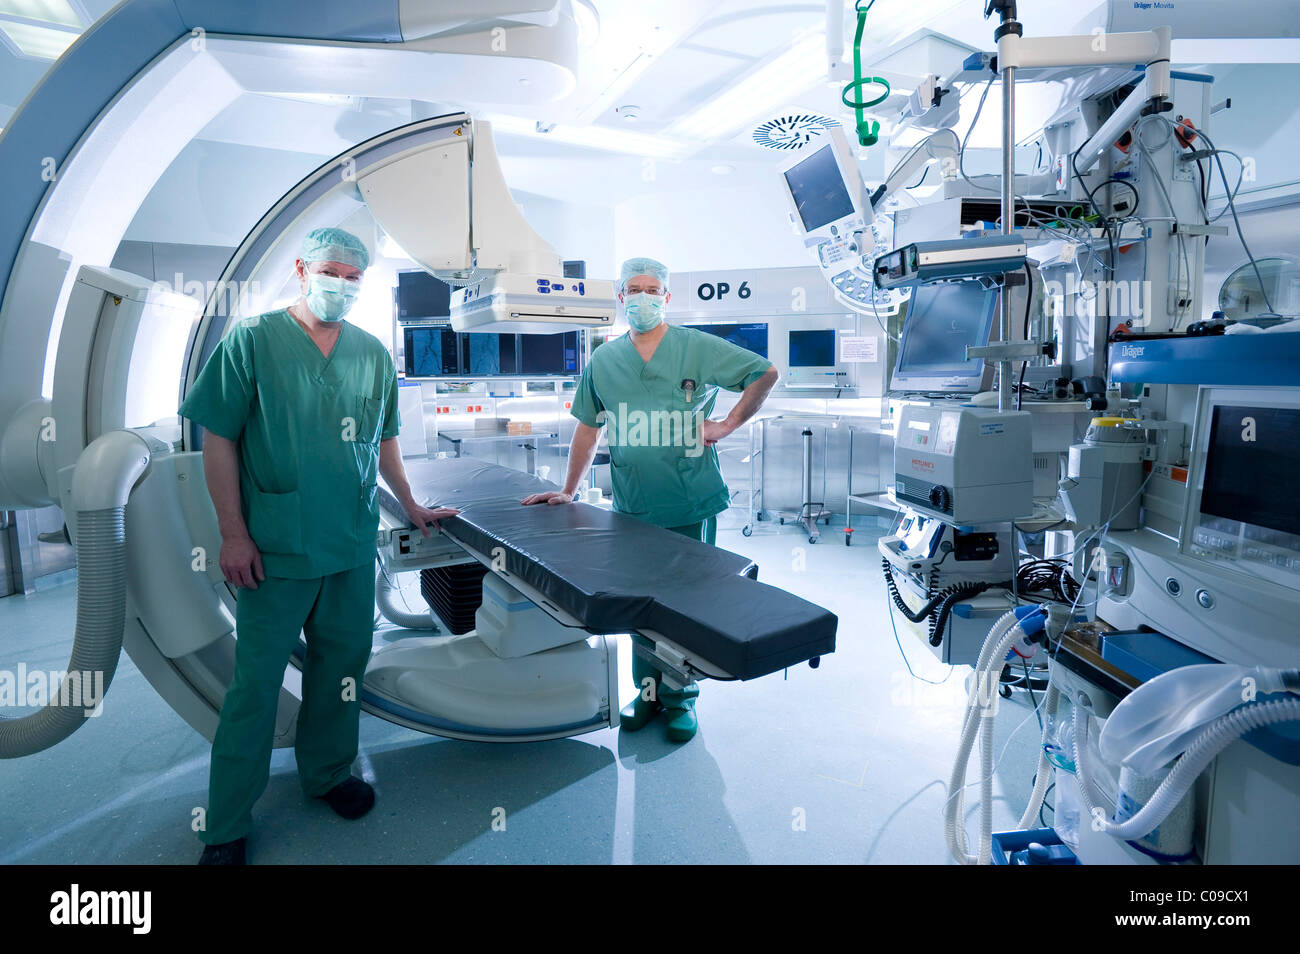 Hybrid operating room, Deutsches Herzzentrum Berlin or German cardiac center, Berlin, Germany, Europe Stock Photo